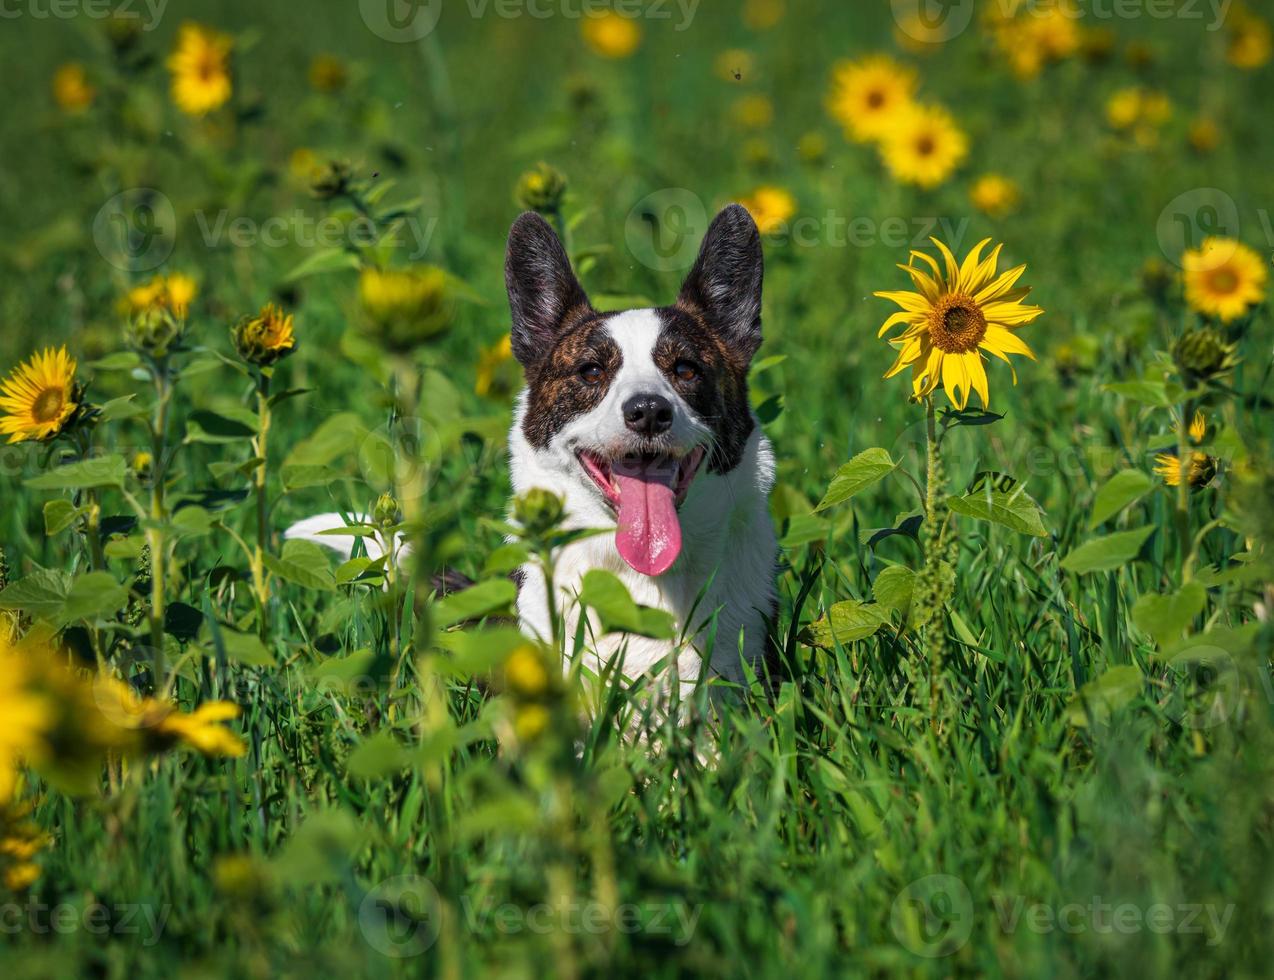 Corgi dog playing in a field of yellow sunflowers photo